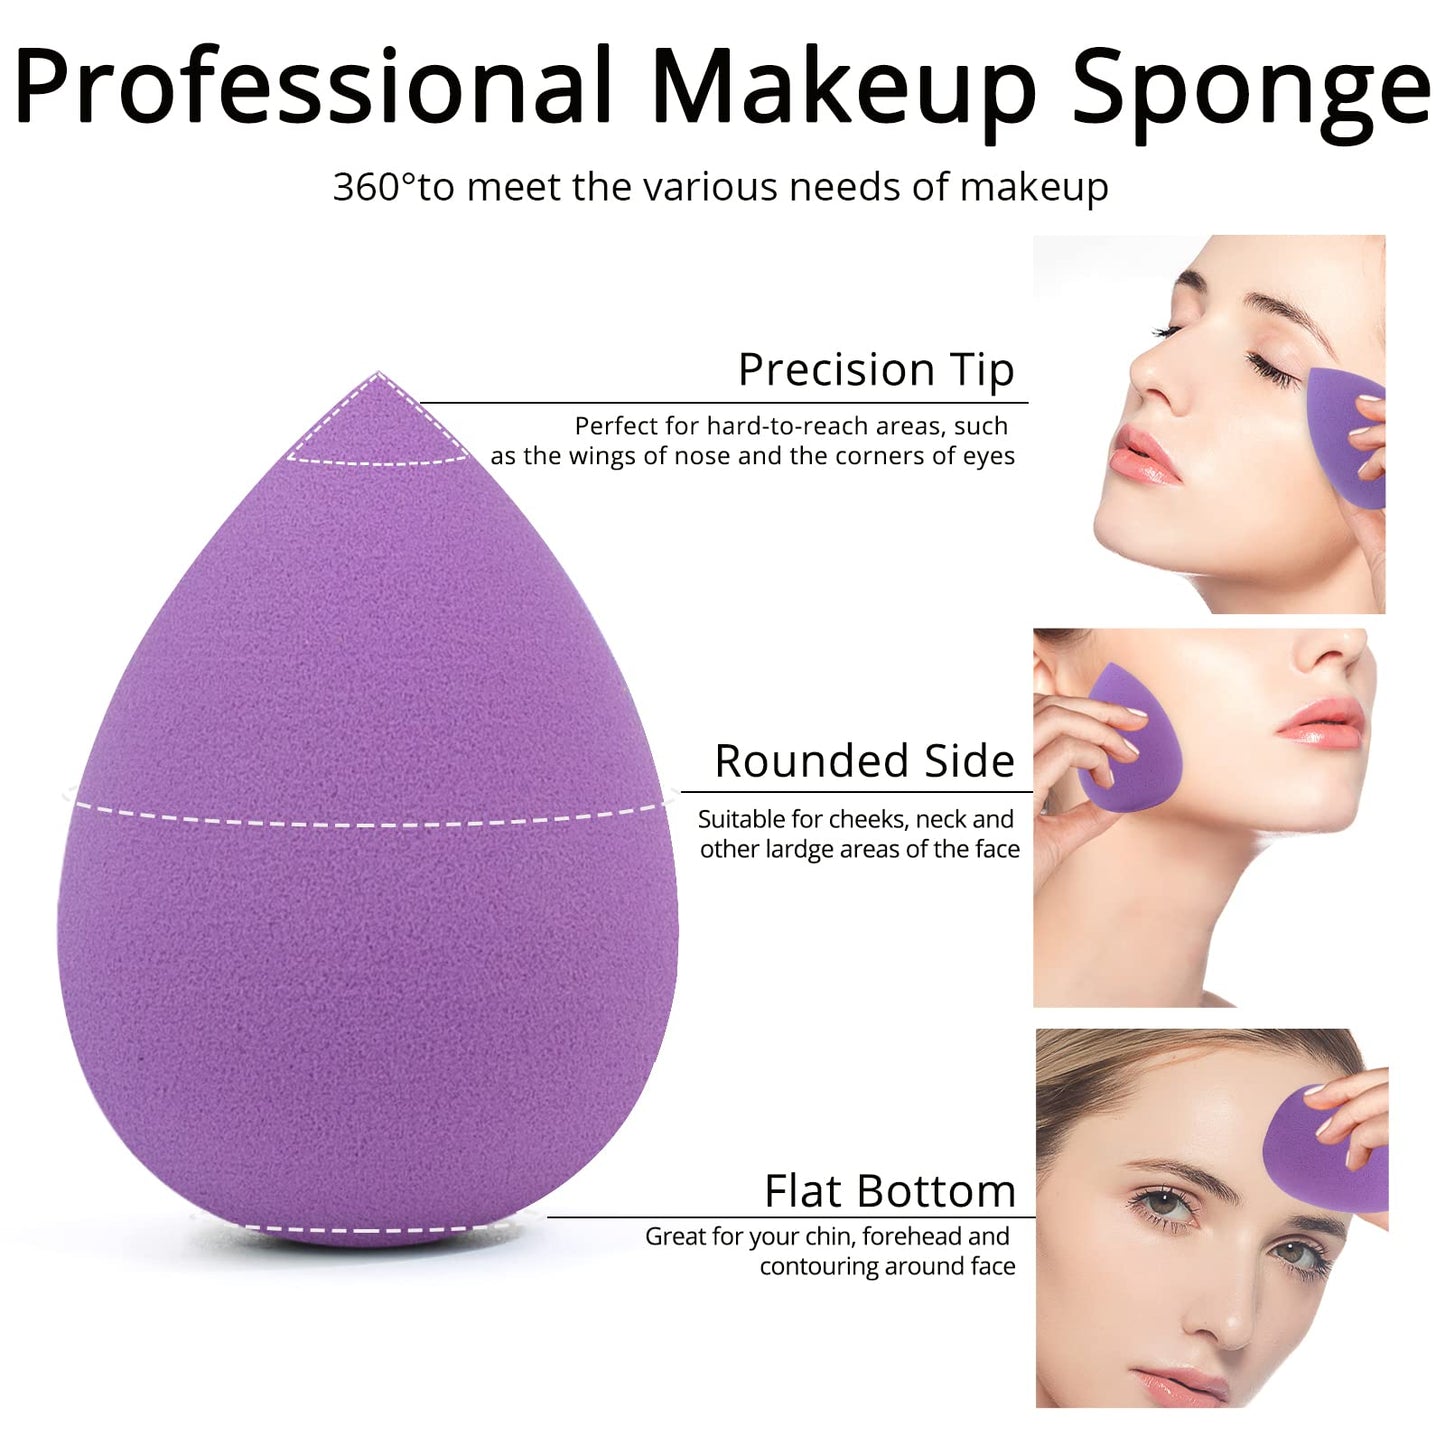 Beakey 5pcs Basic Color Makeup Sponge Set for Liquid, Cream, Powder TK Popular